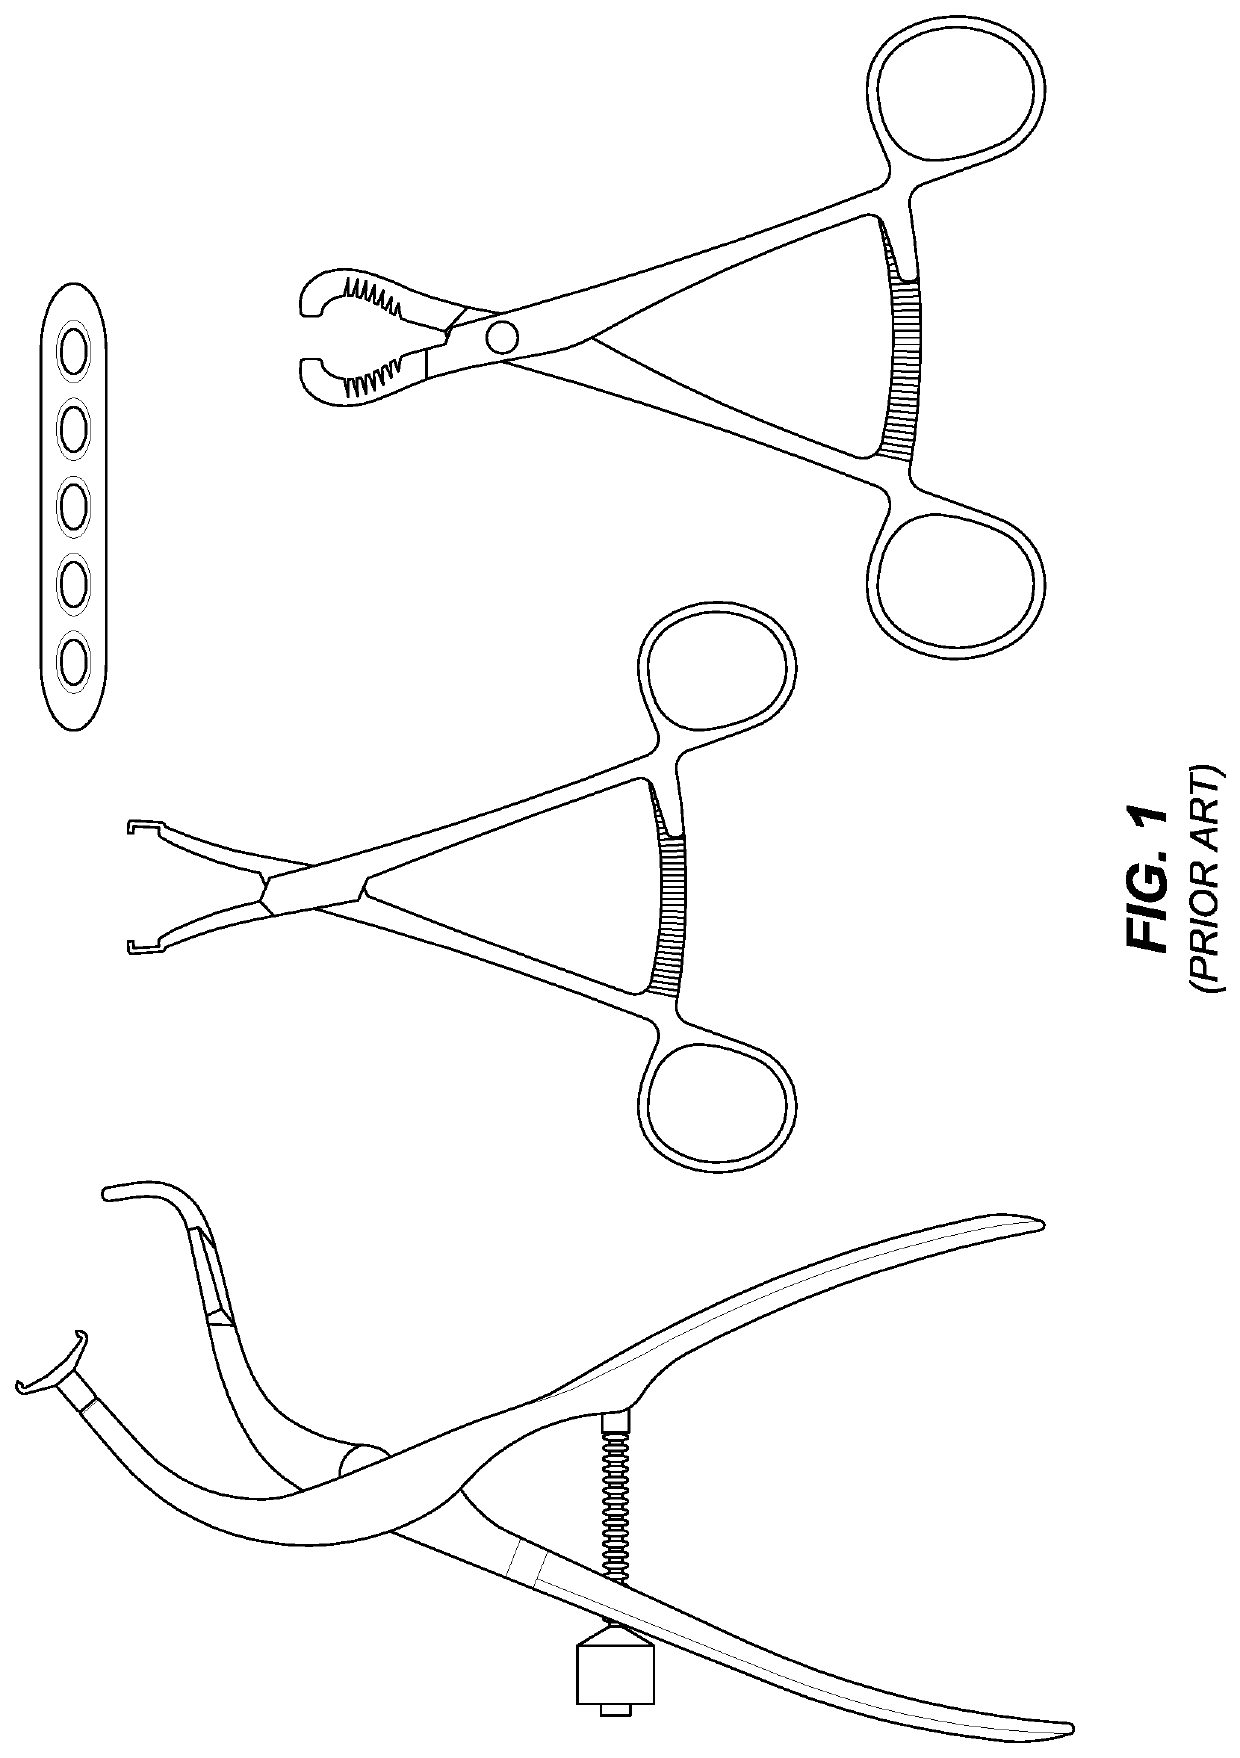 Orthopedic clamps